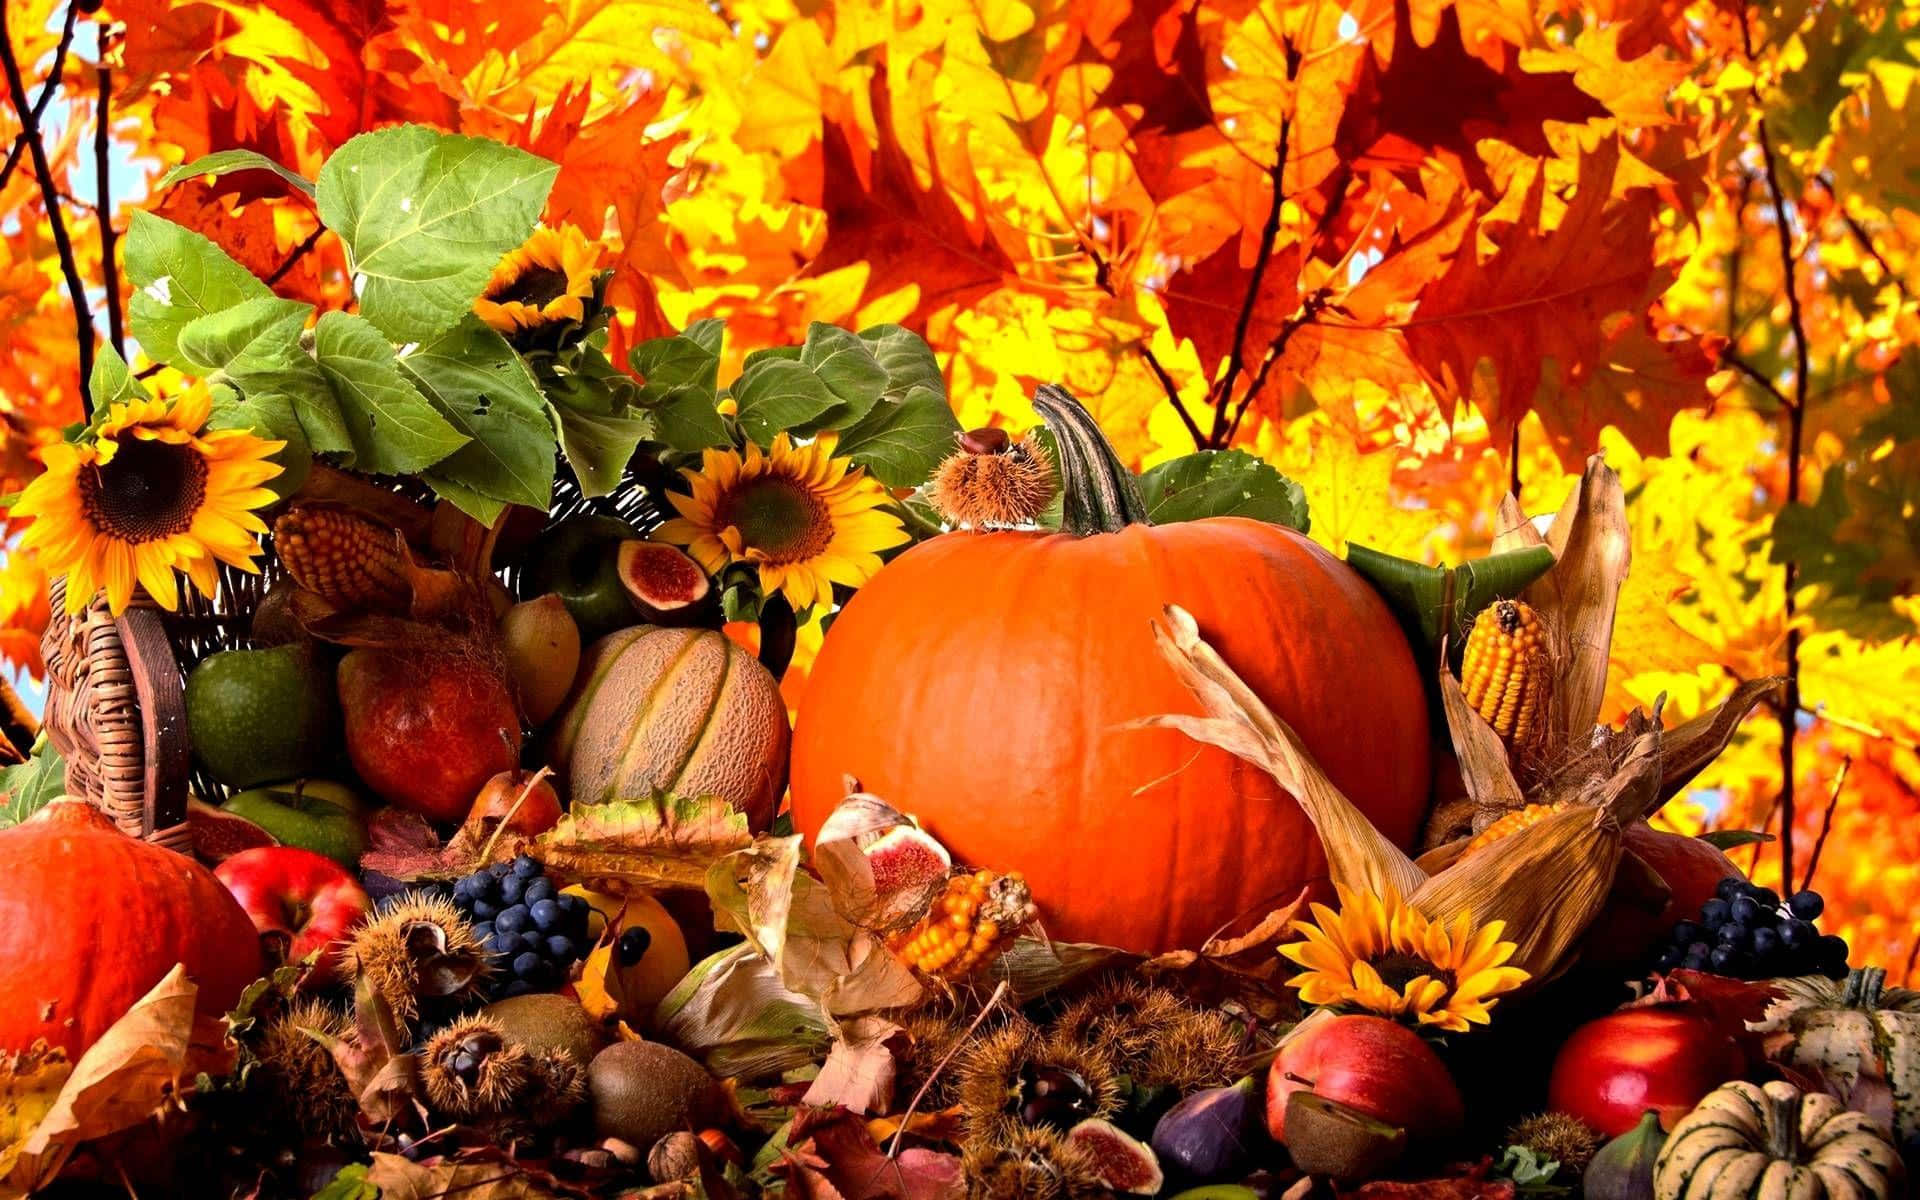 A Vibrant Fall Pumpkin Display